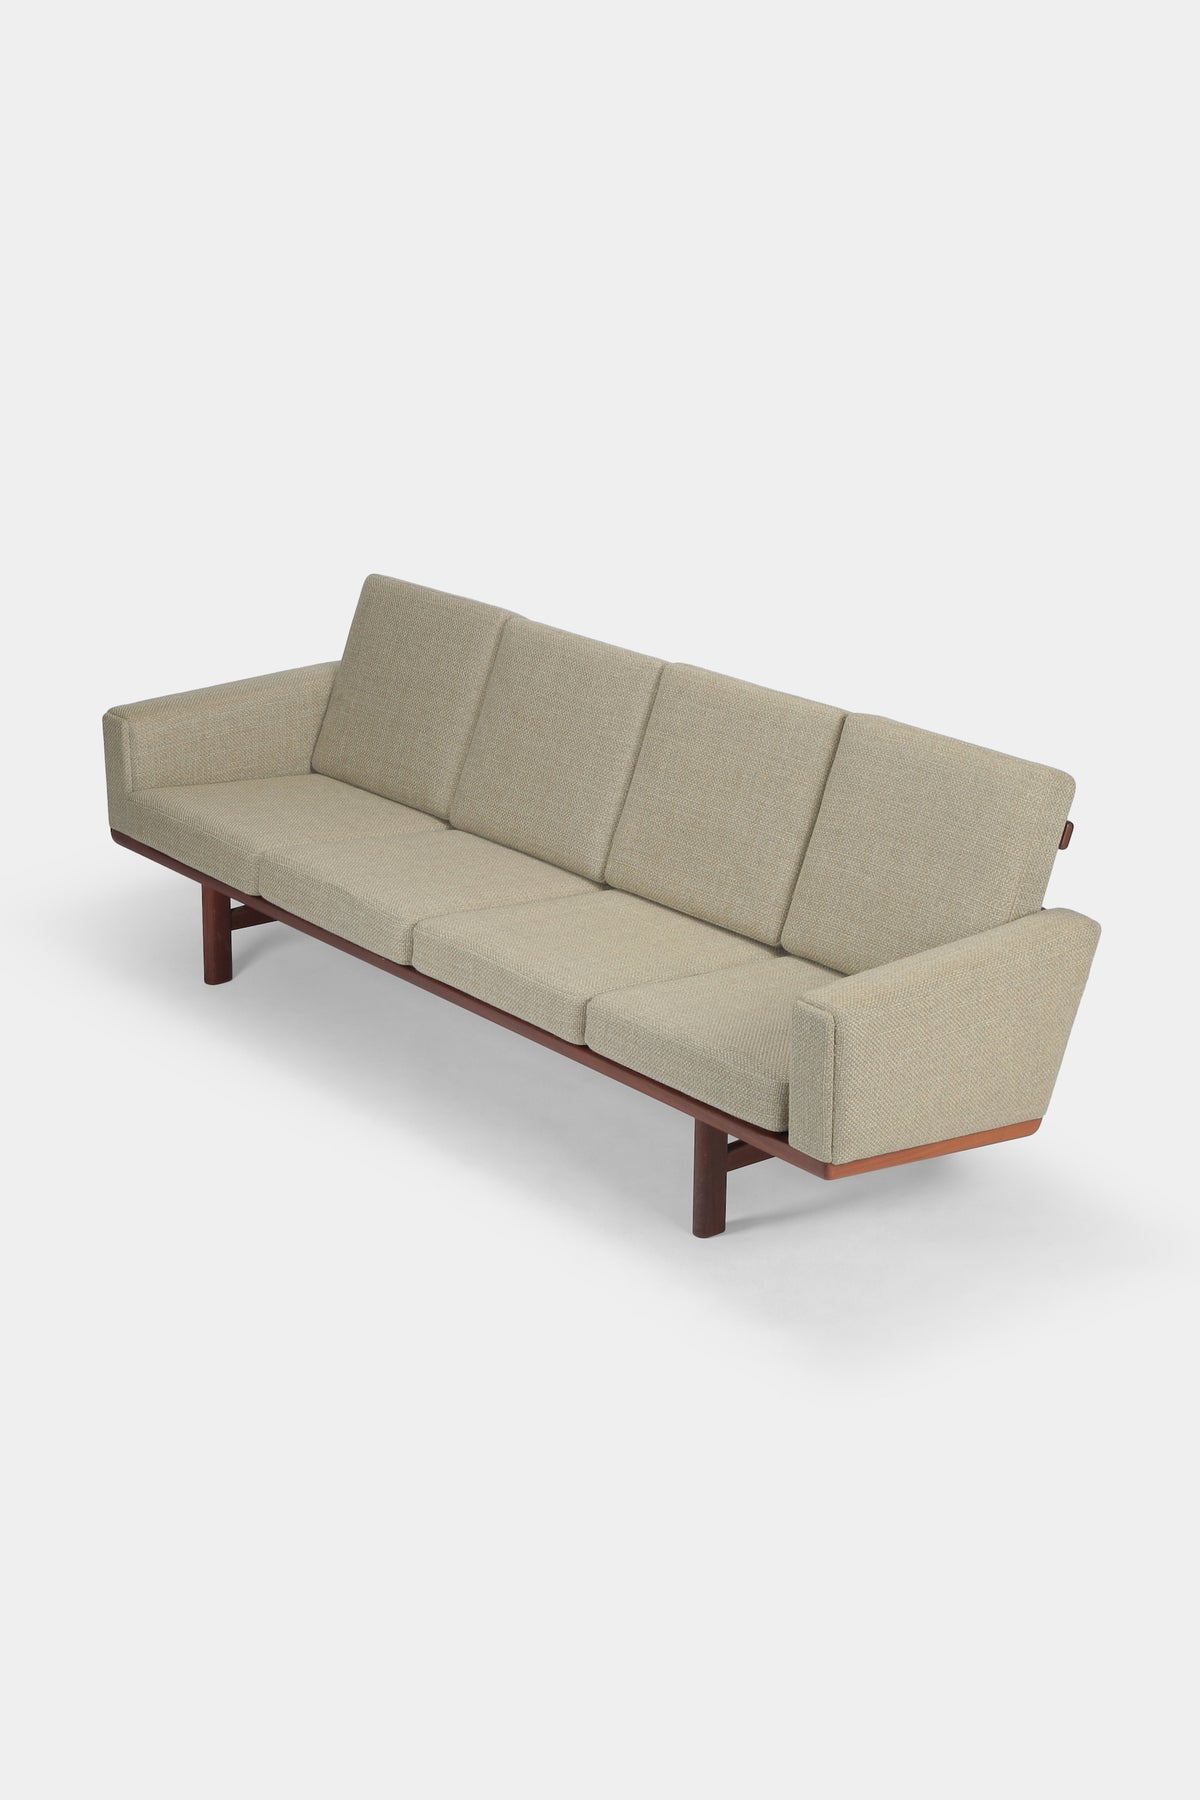 Hans Wegner GE 236 four-seat teak sofa original cover 50s